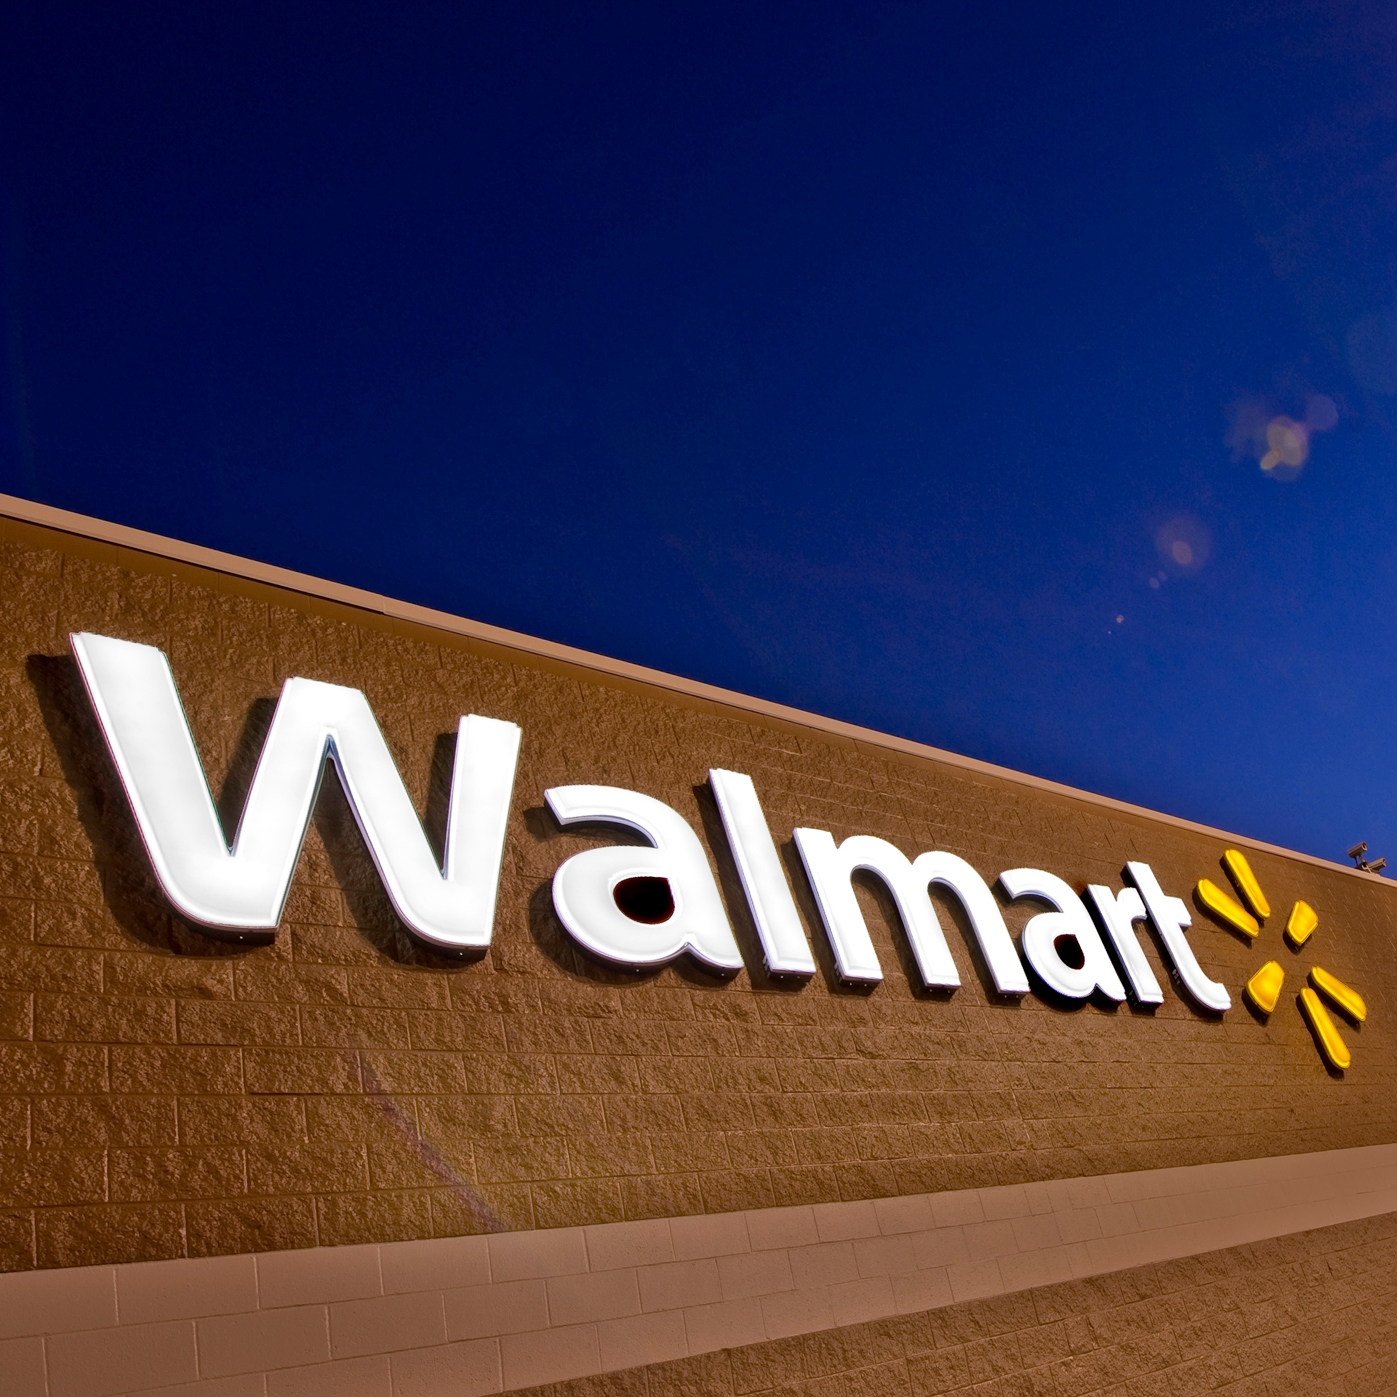 Has Wal-Mart Warning Killed Higher Minimum Wage? – 24/7 Wall St.